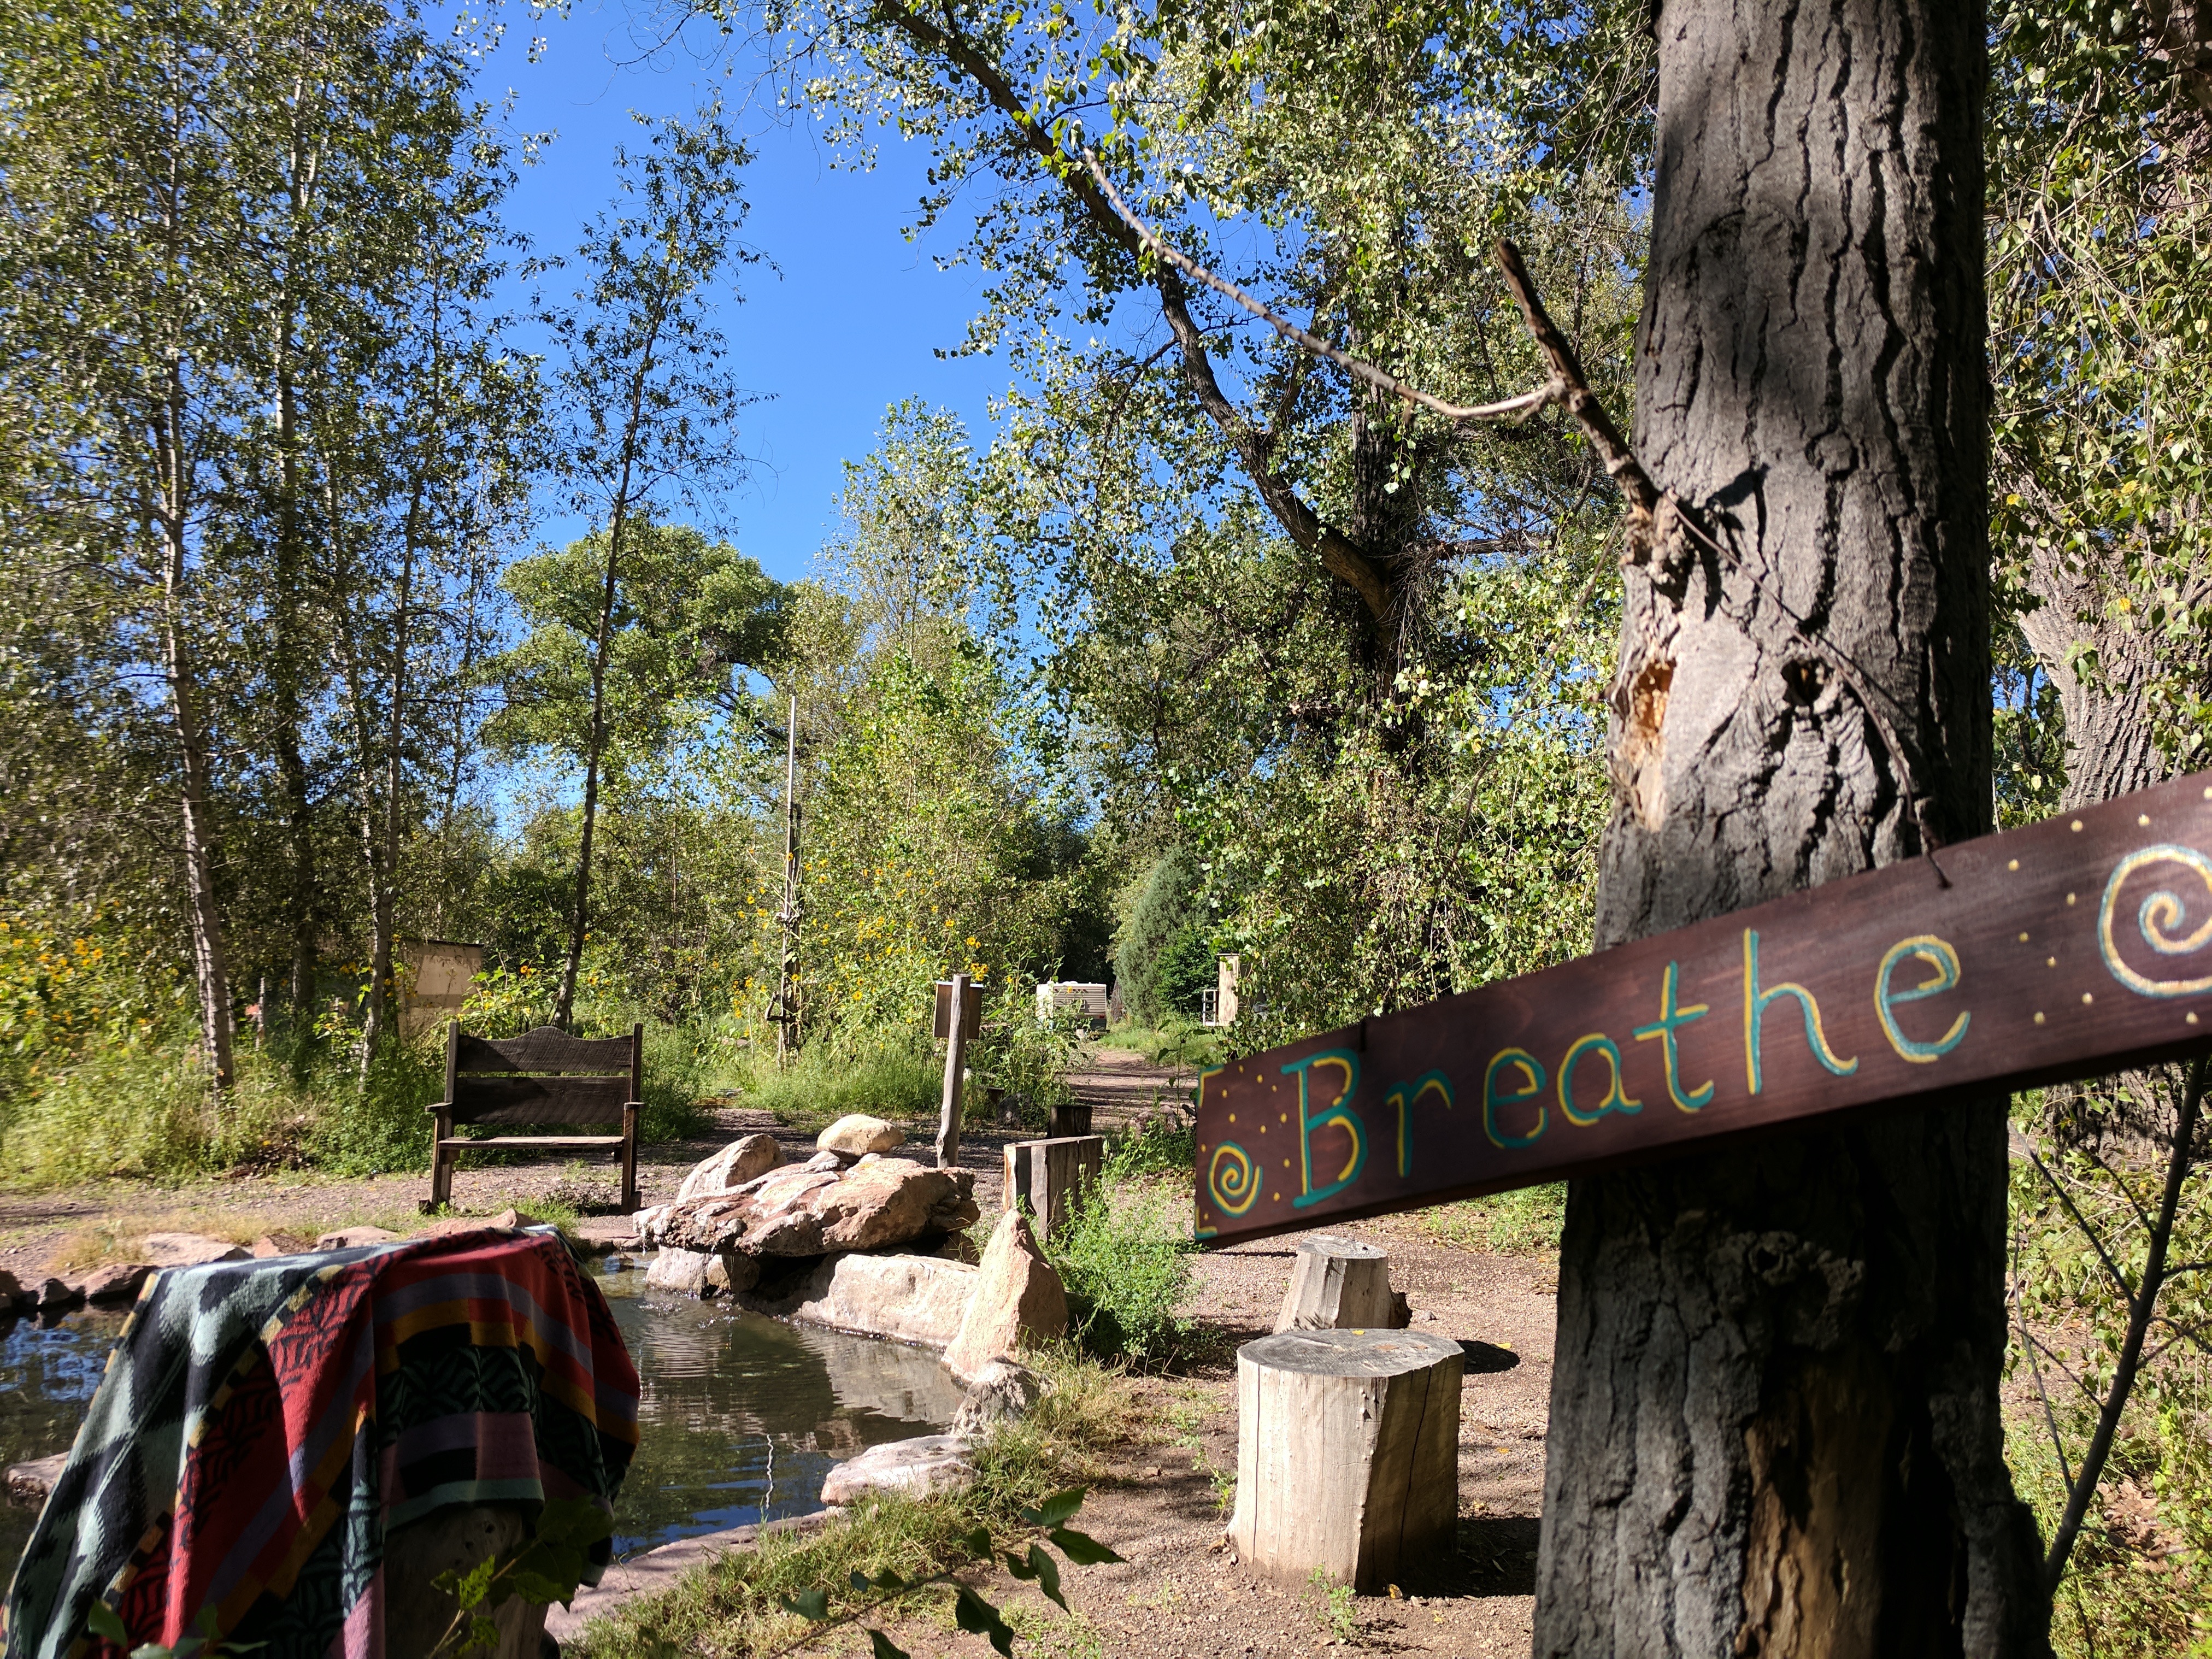 Breathe - Gila Hot Springs Campground.